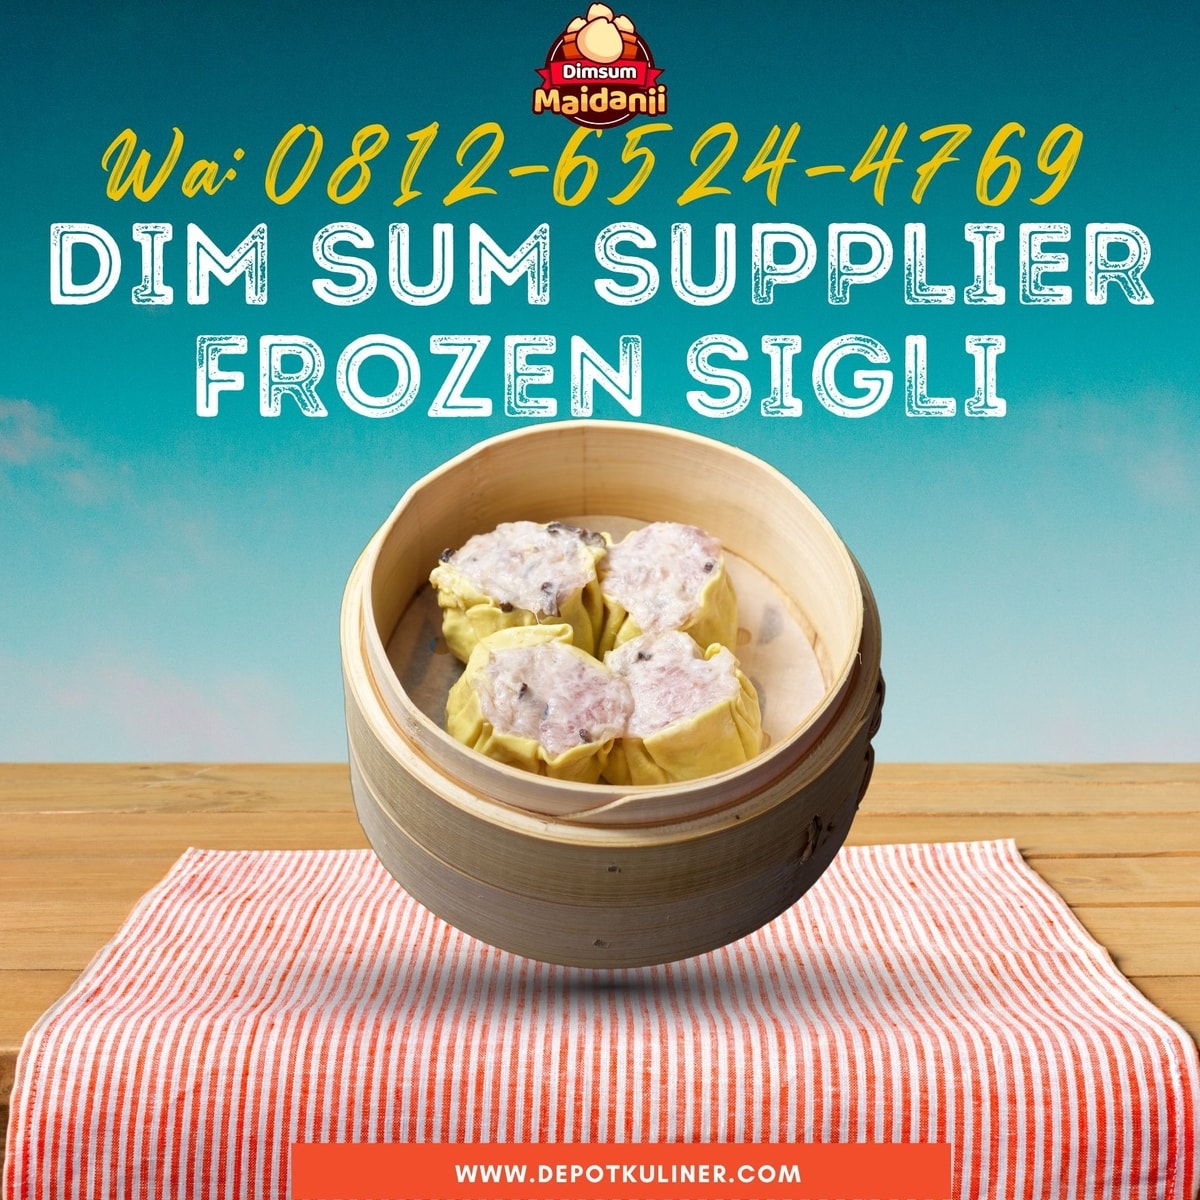 HARGA GROSIR, Call 0812-6524-4769, Dim Sum Supplier Frozen Sigli